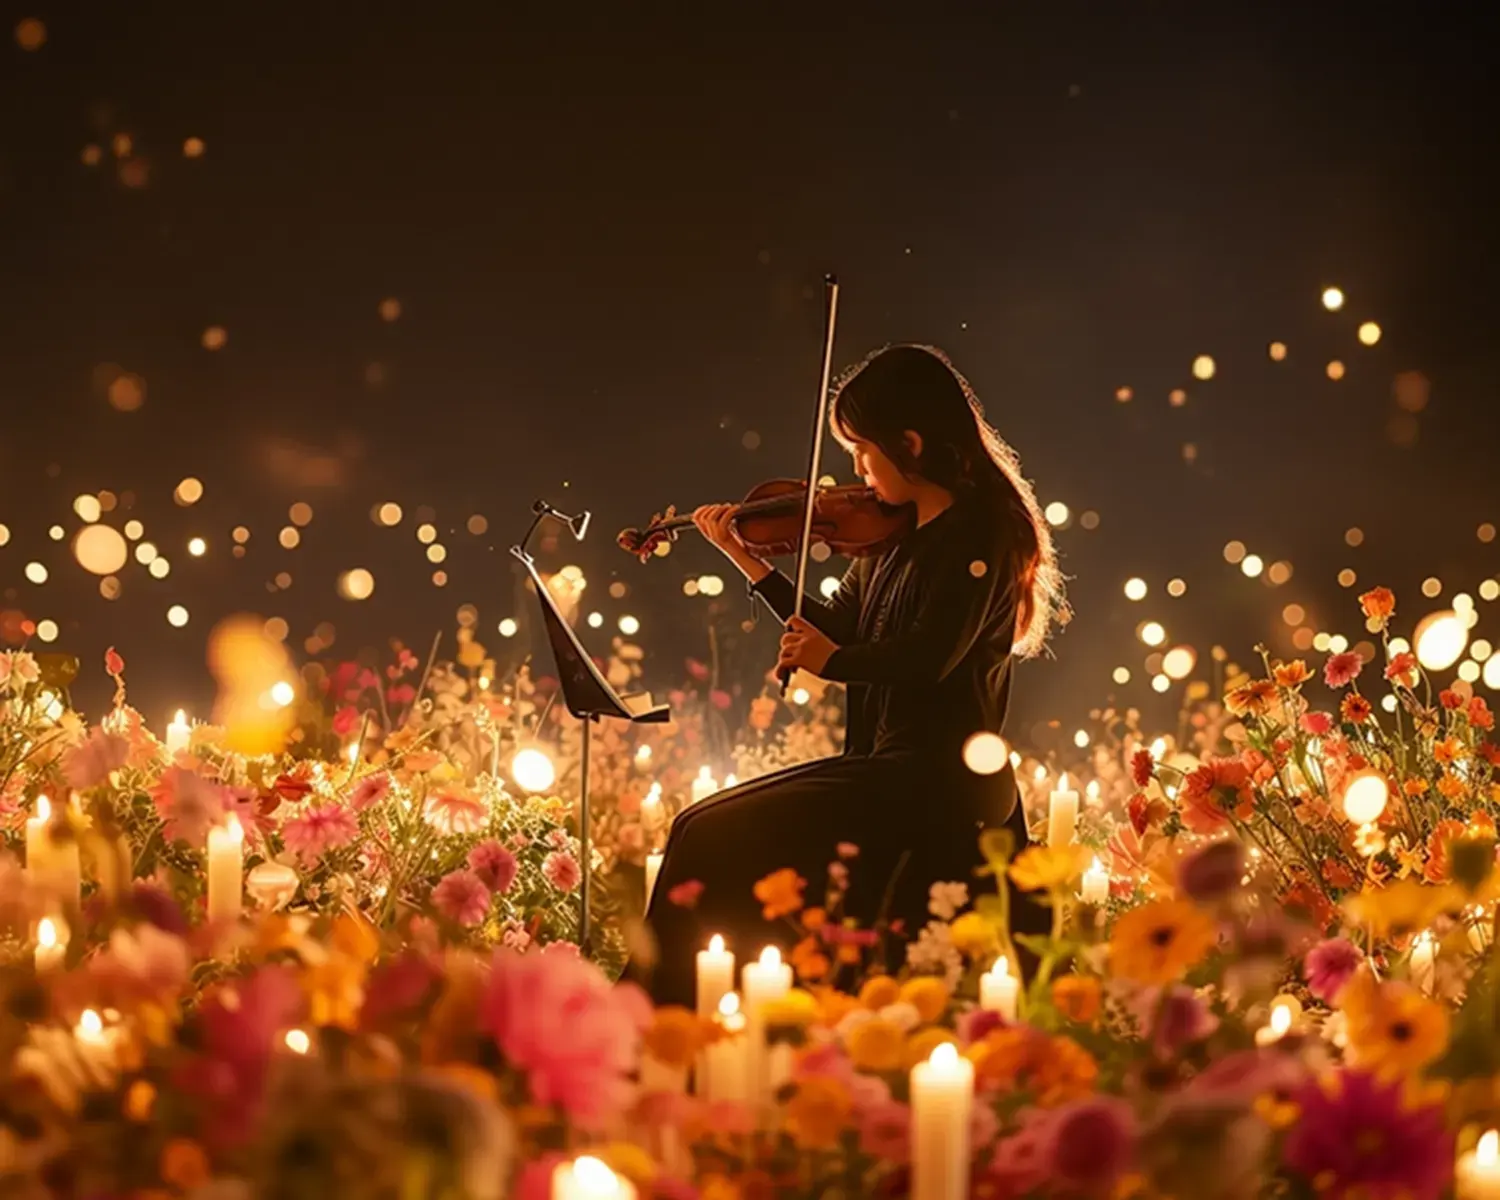 Candlelight Spring - Concertos Clássicos de Primavera Candlelight